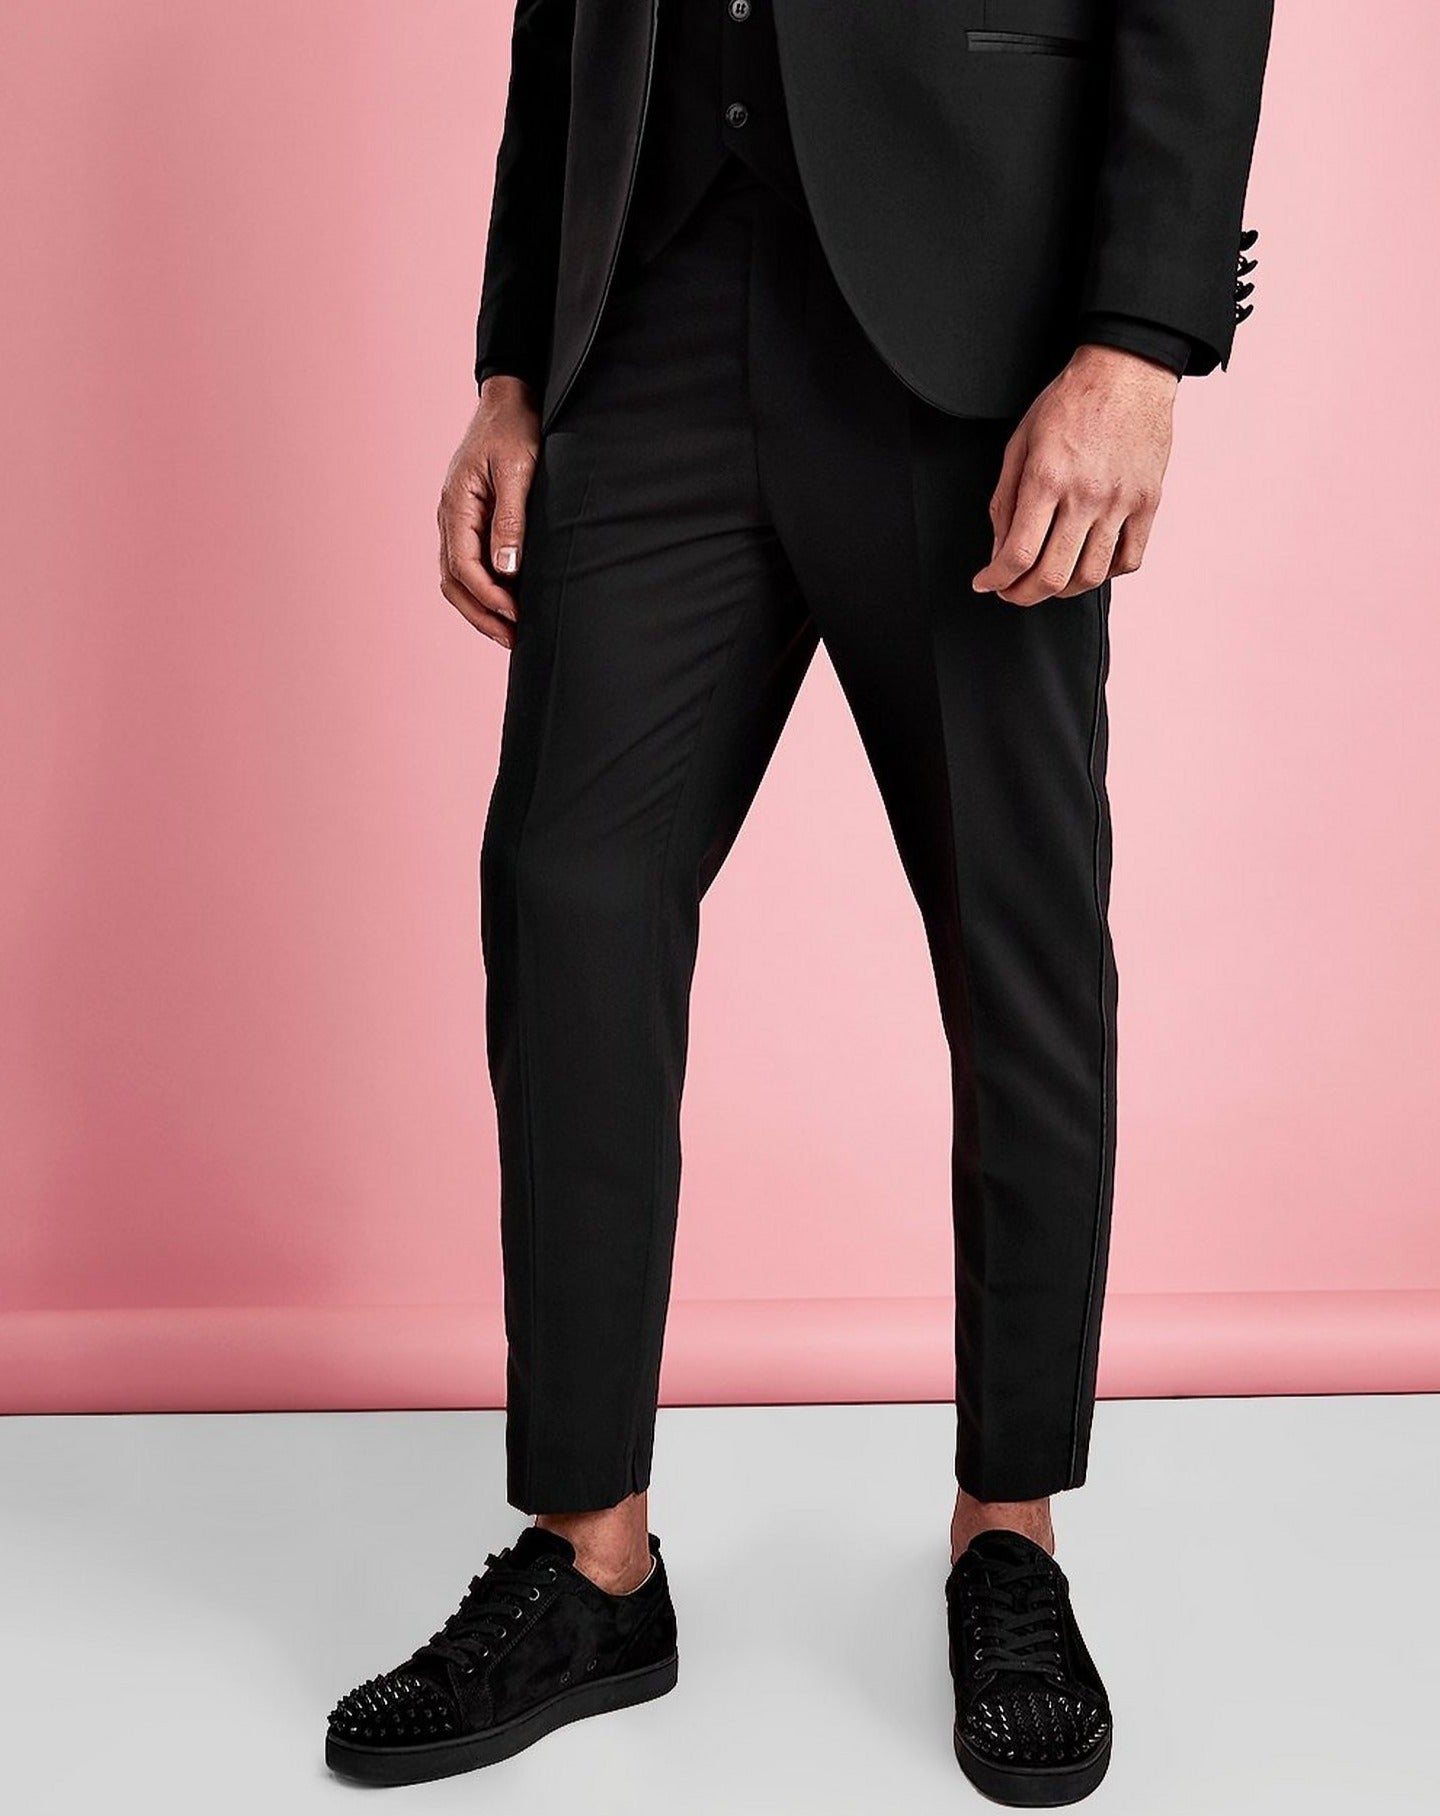 Mens Black Flat Front ComfortWaist Tuxedo Pants with Satin Stripe   99tux